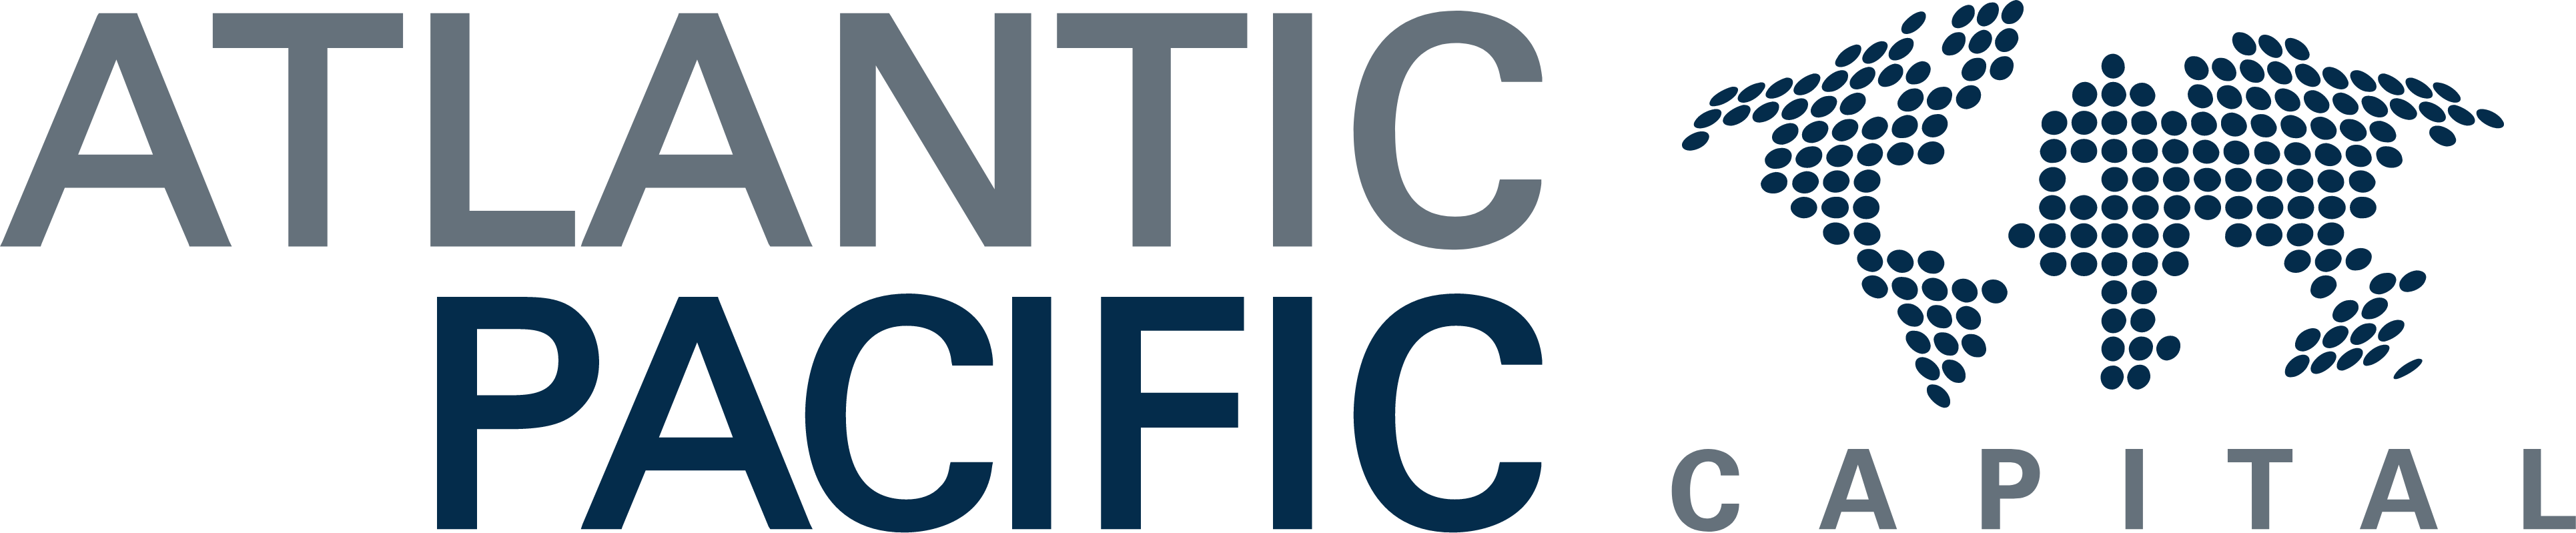 AtlanticPacific_logo